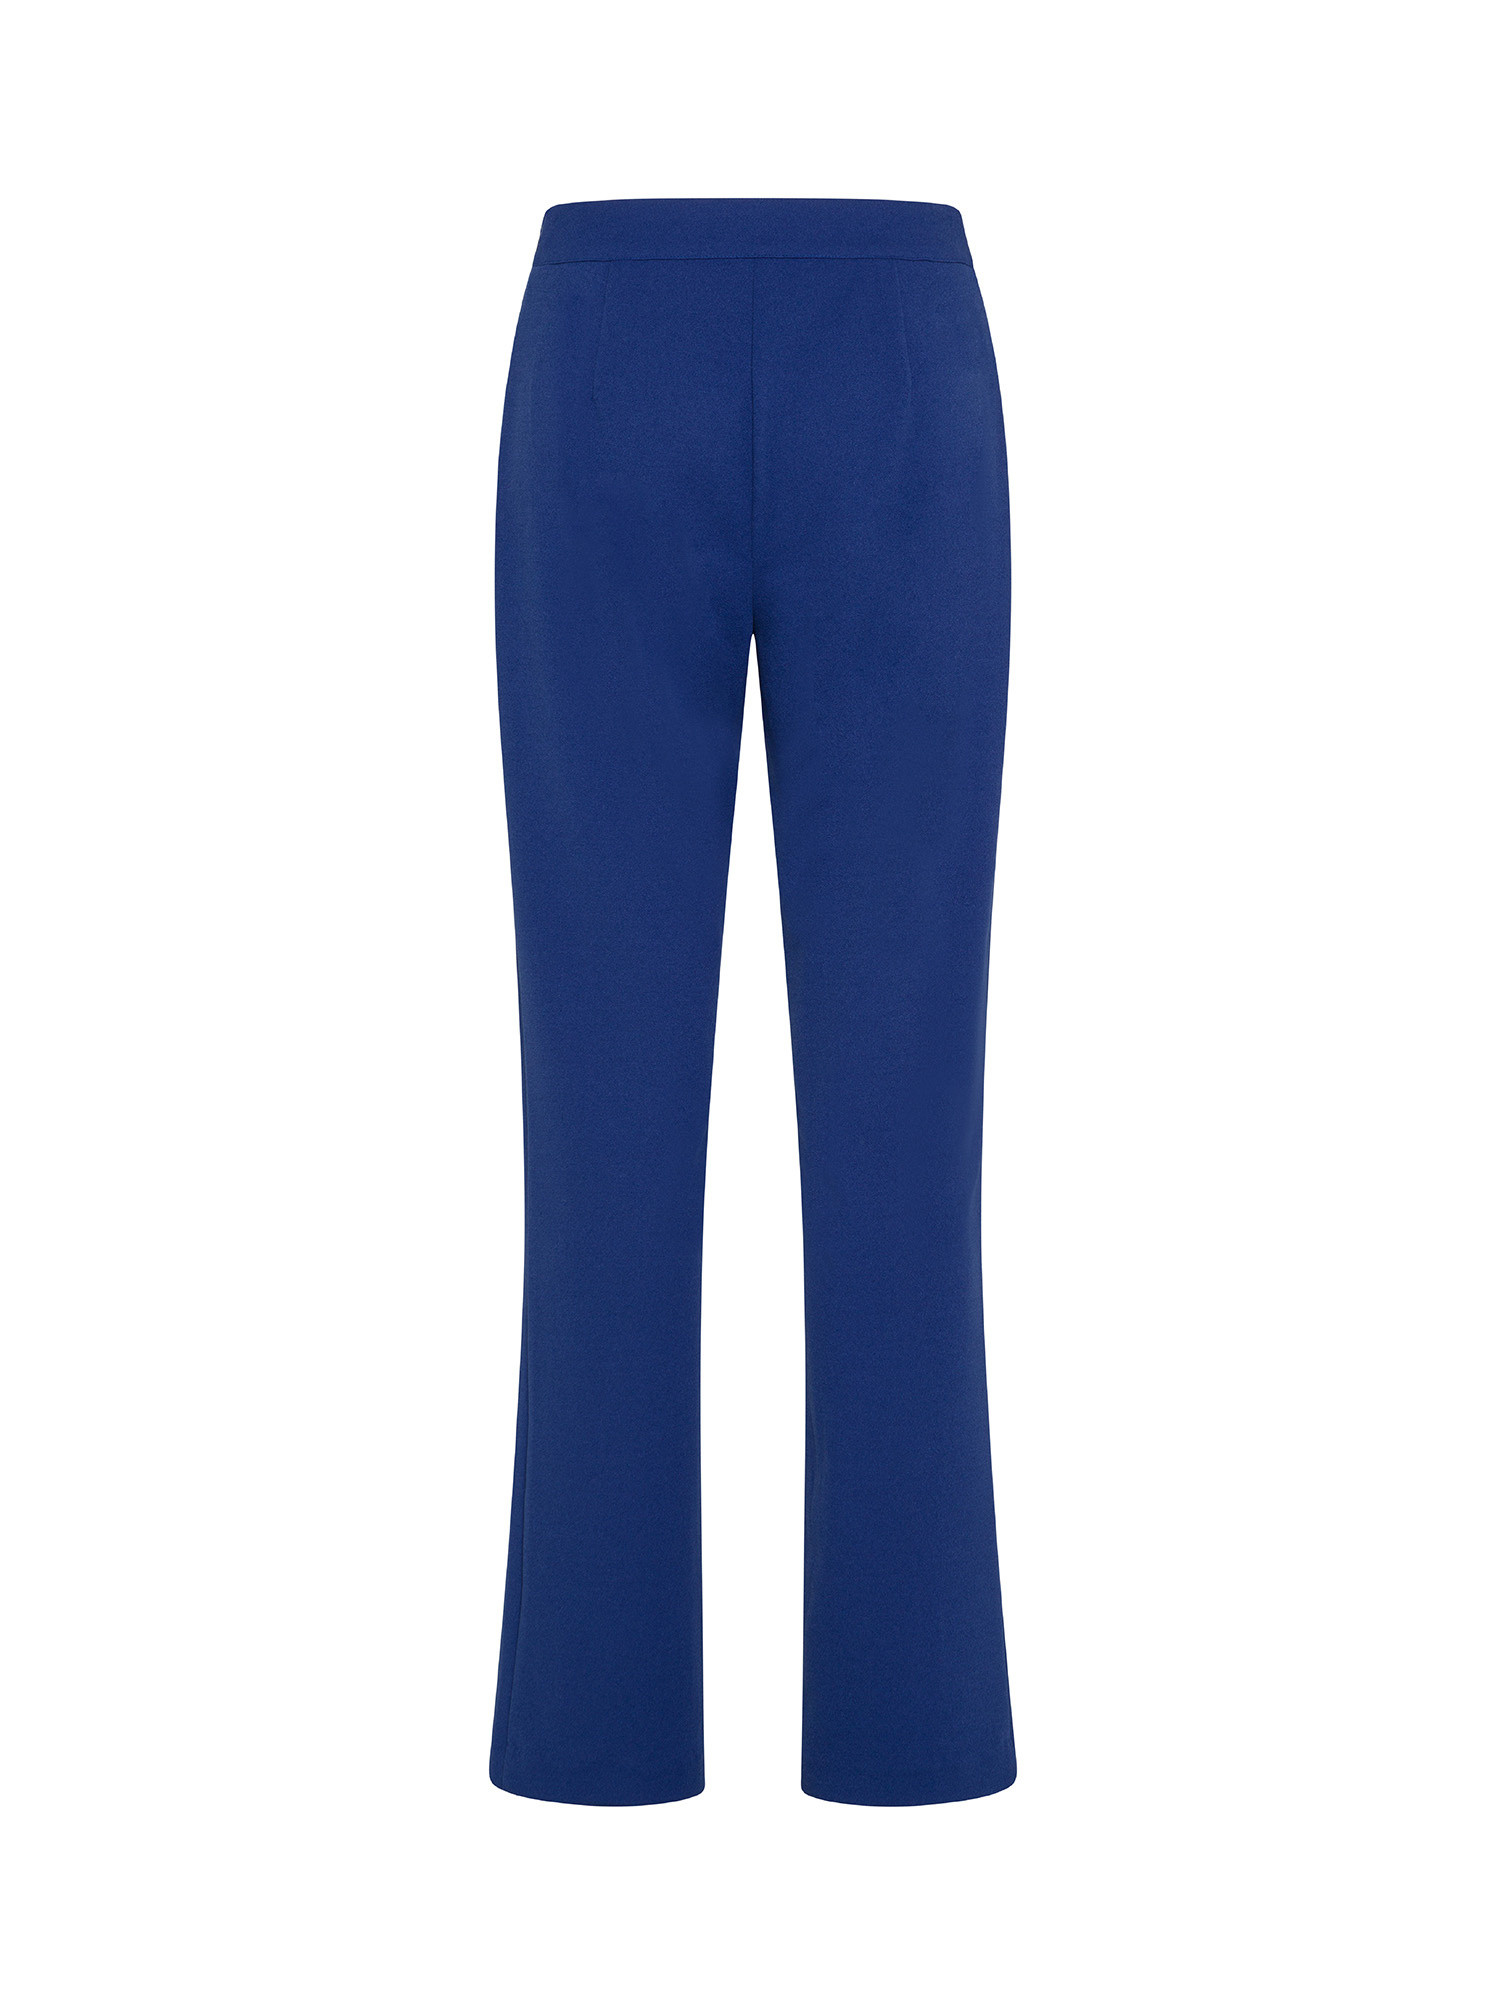 Koan - Pantaloni in crepe con spacchi, Blu royal, large image number 1